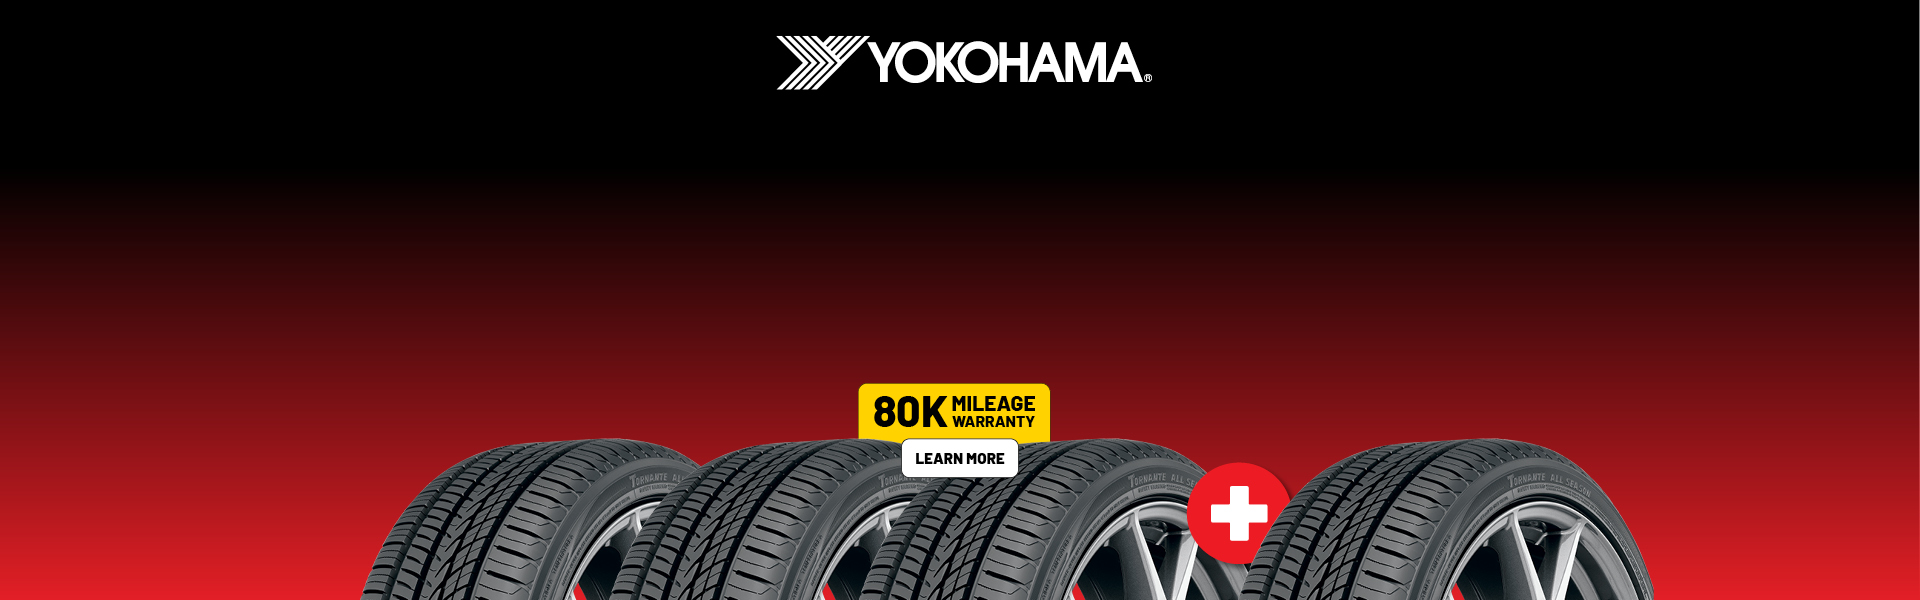 Yokohama Tire Deal Buy 3 Get 1 Free